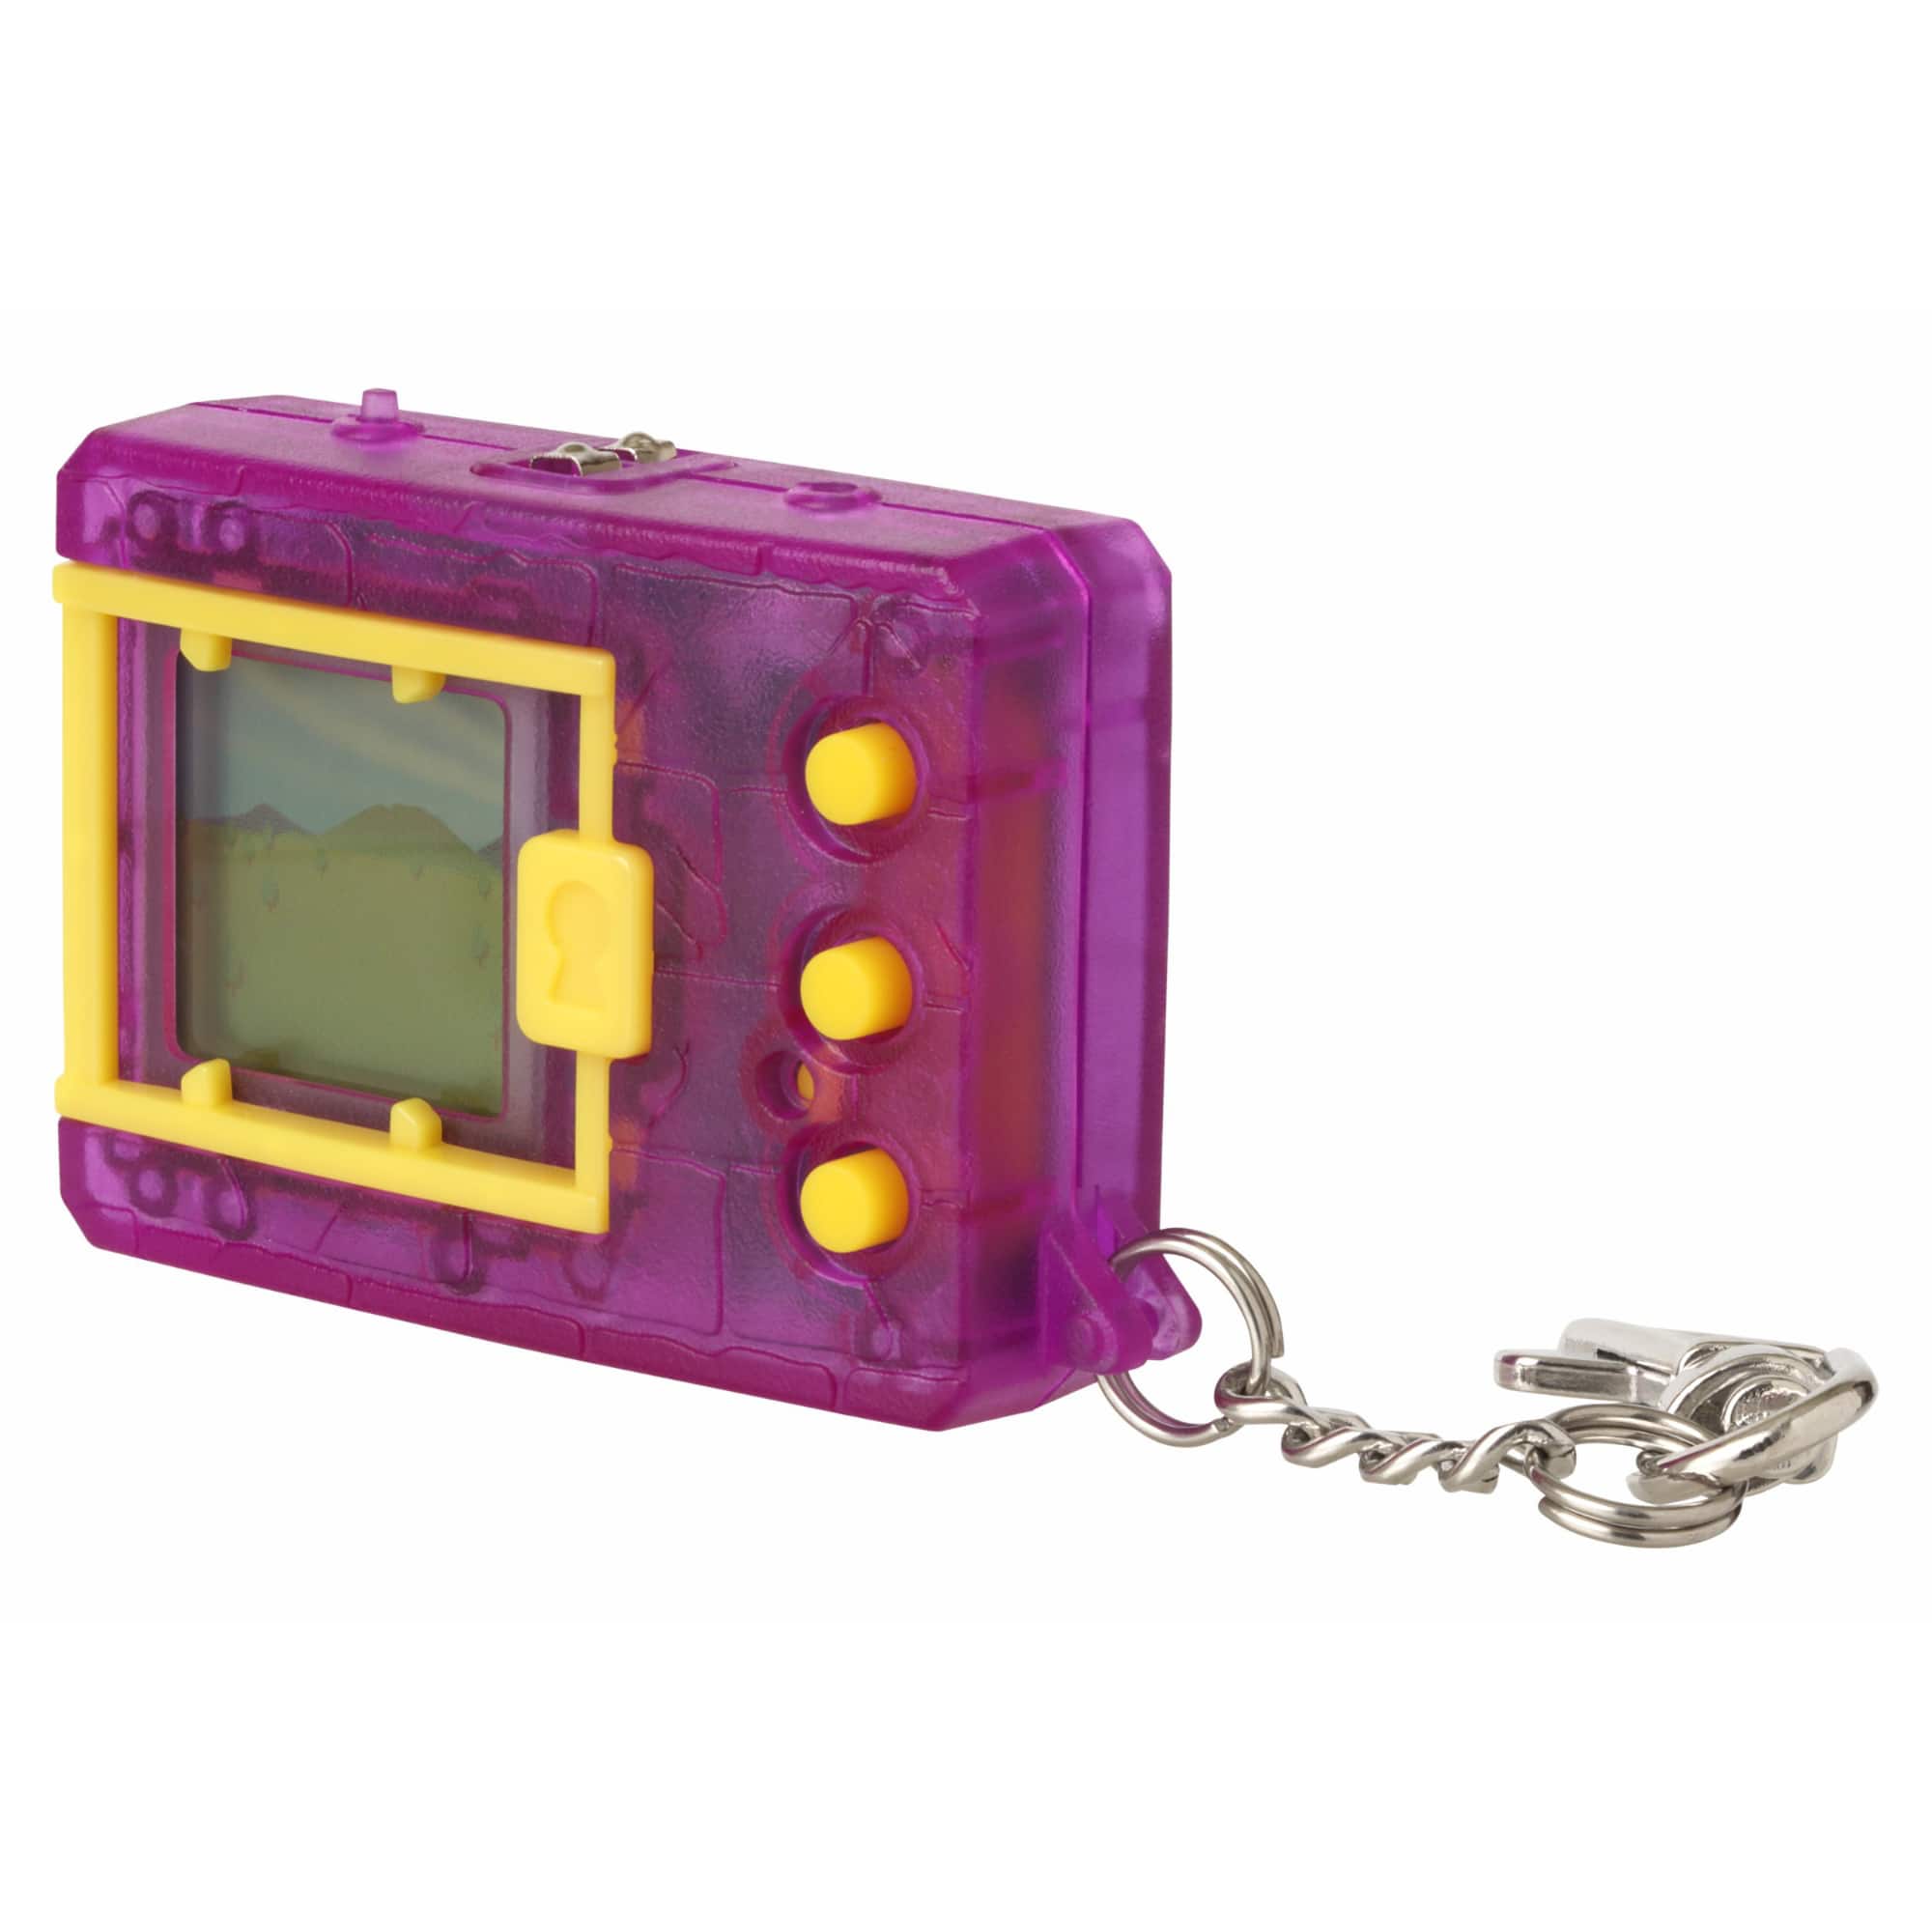 Bandai Purple Original Digimon Digivice Virtual Pet Translucent